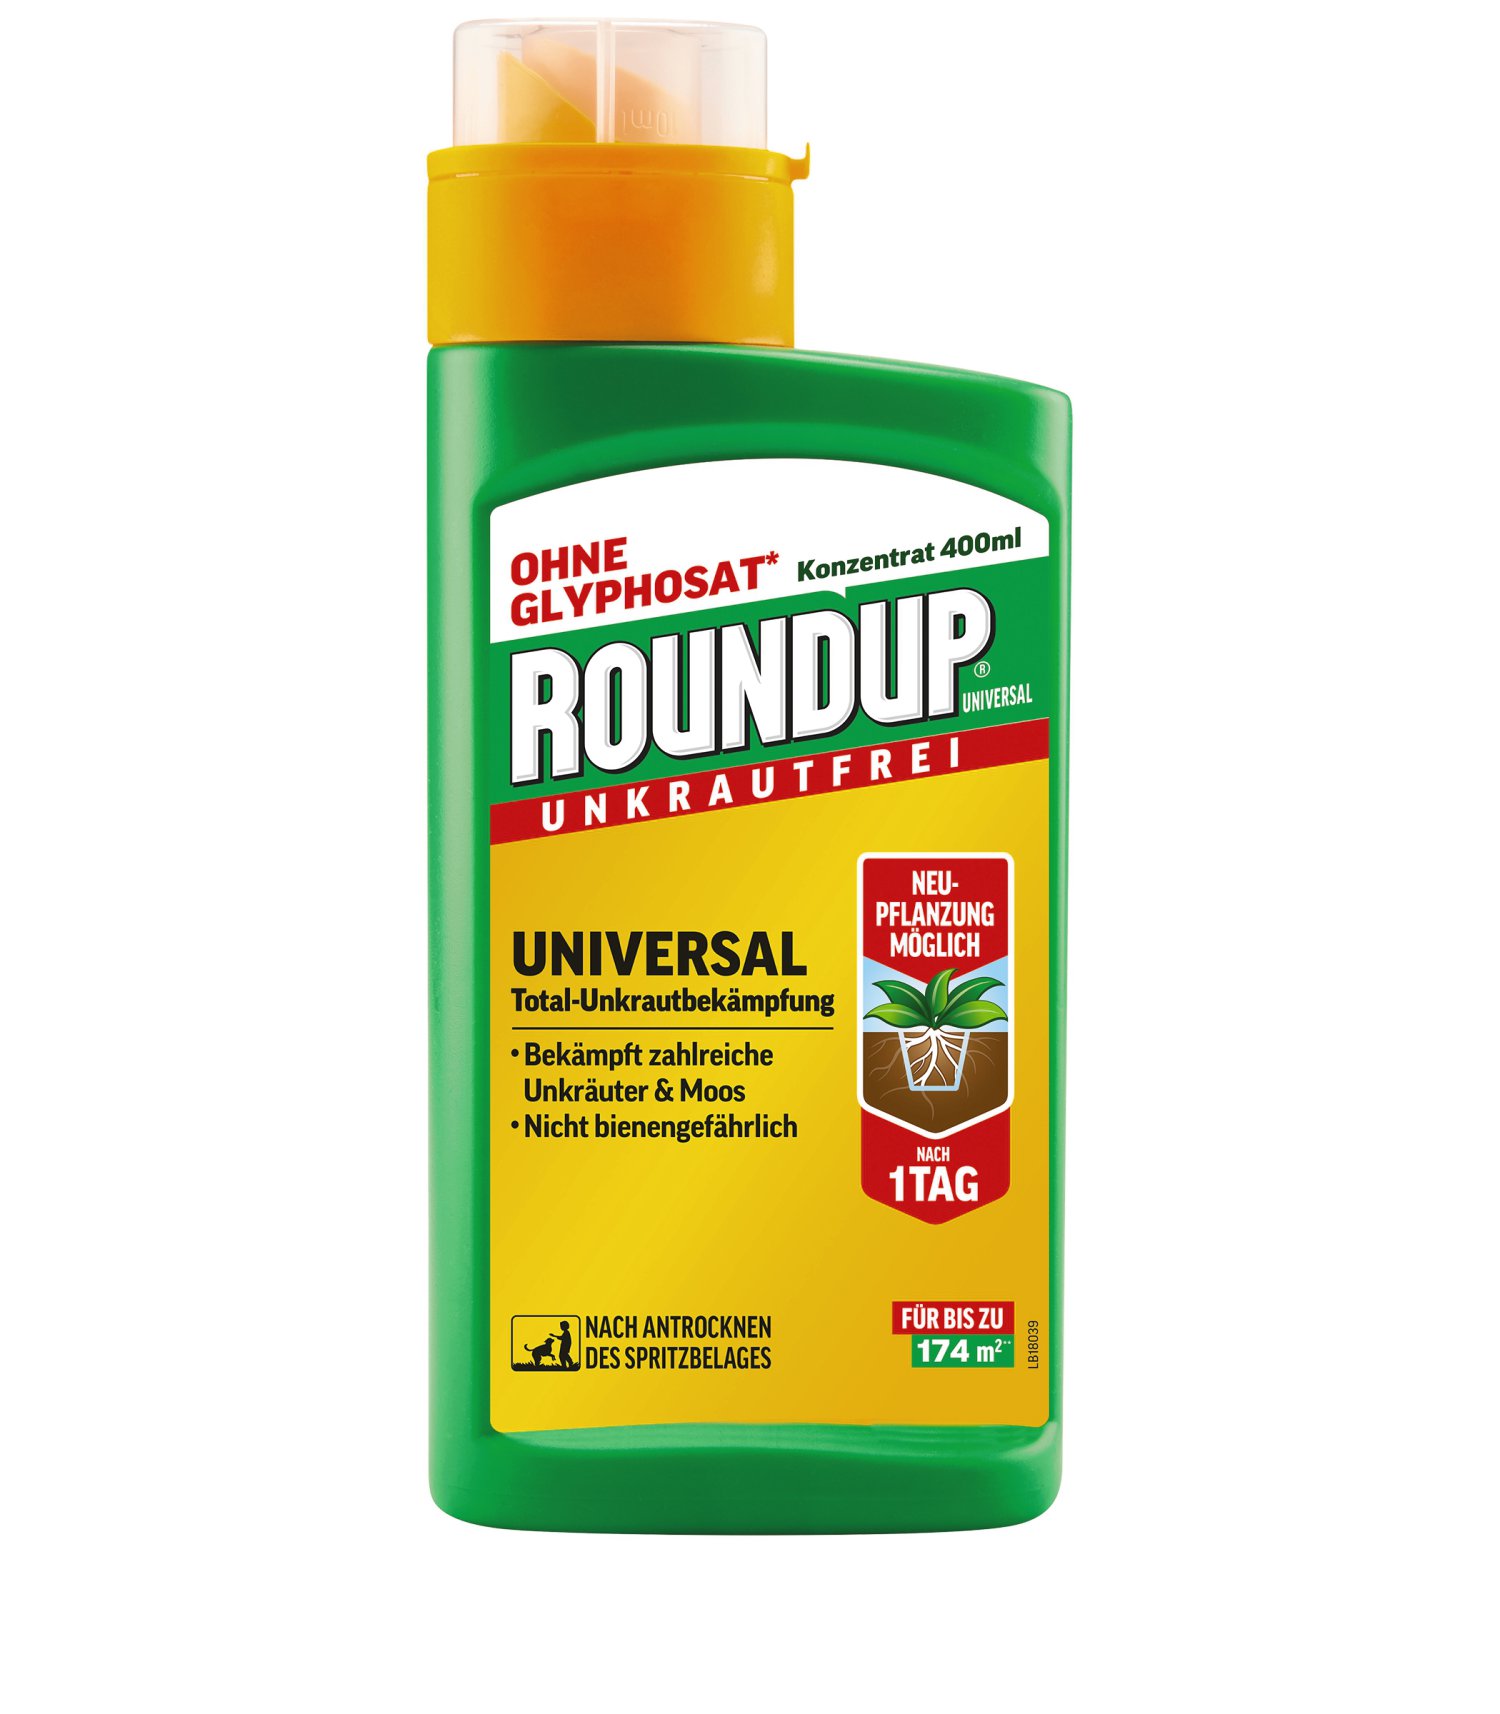 Roundup® Unkrautfrei Express Universal-Konzentrat